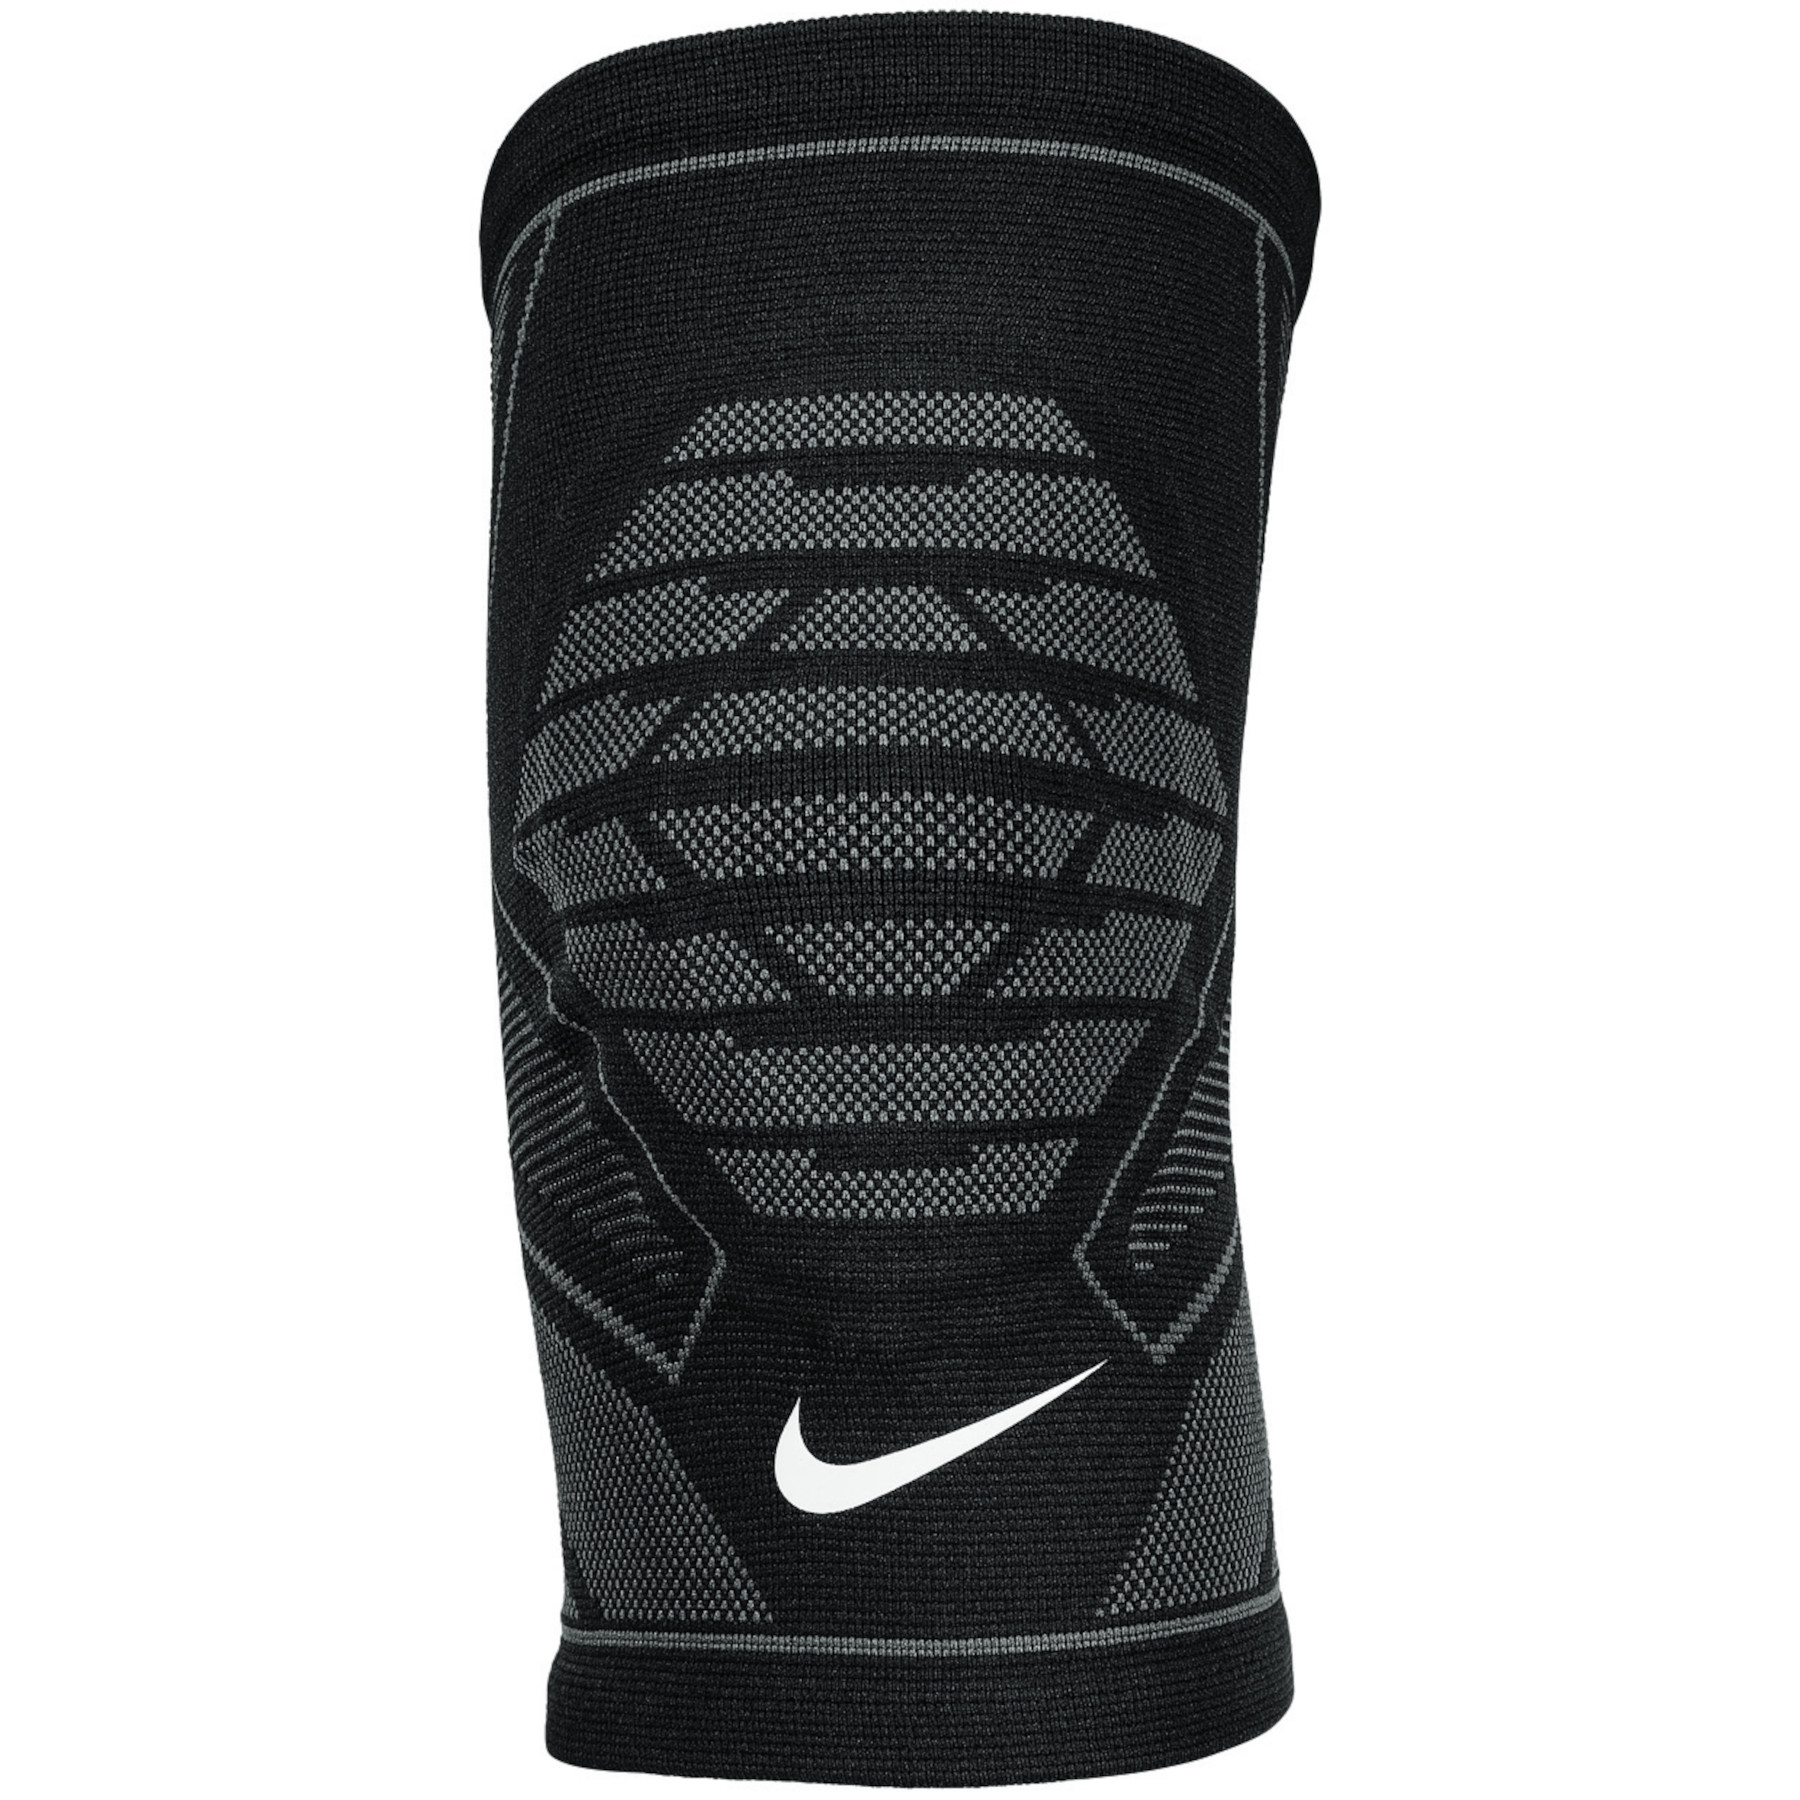 Produktbild von Nike Pro Knitted Knie Bandage - black/anthracite/white  031